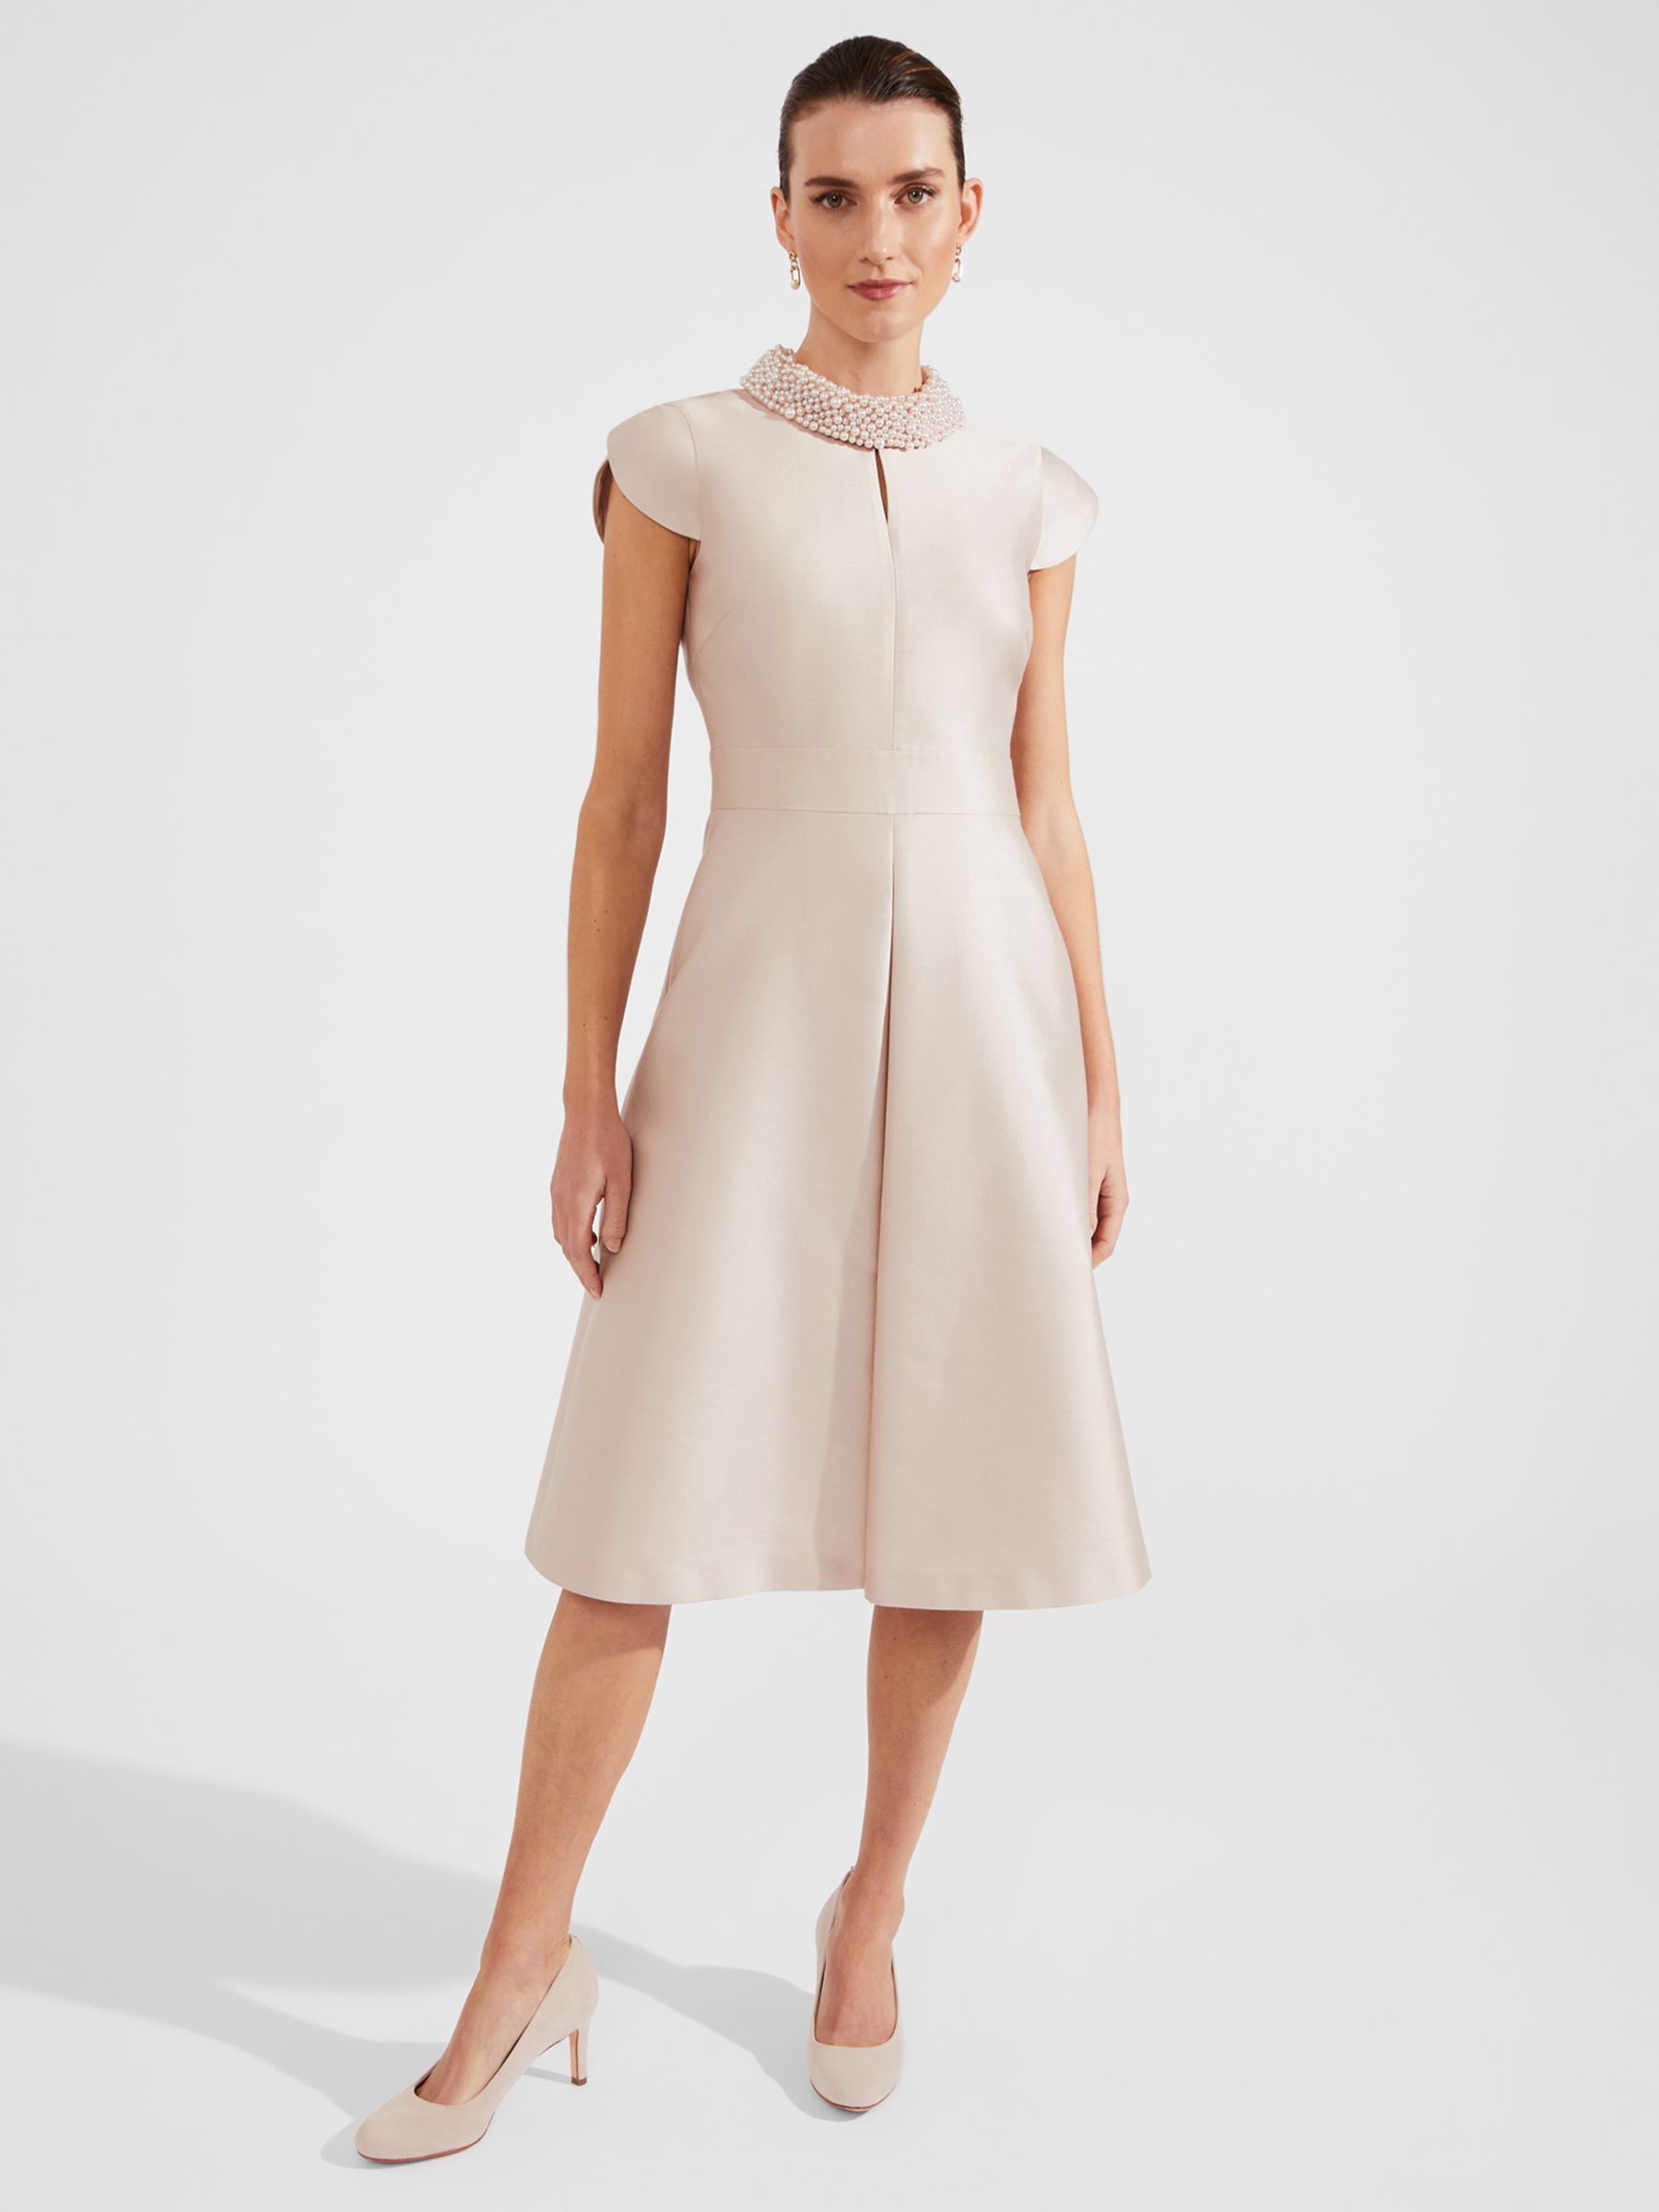 Hobbs Marcella Silk Blend Beaded Dress, Oyster at John Lewis & Partners